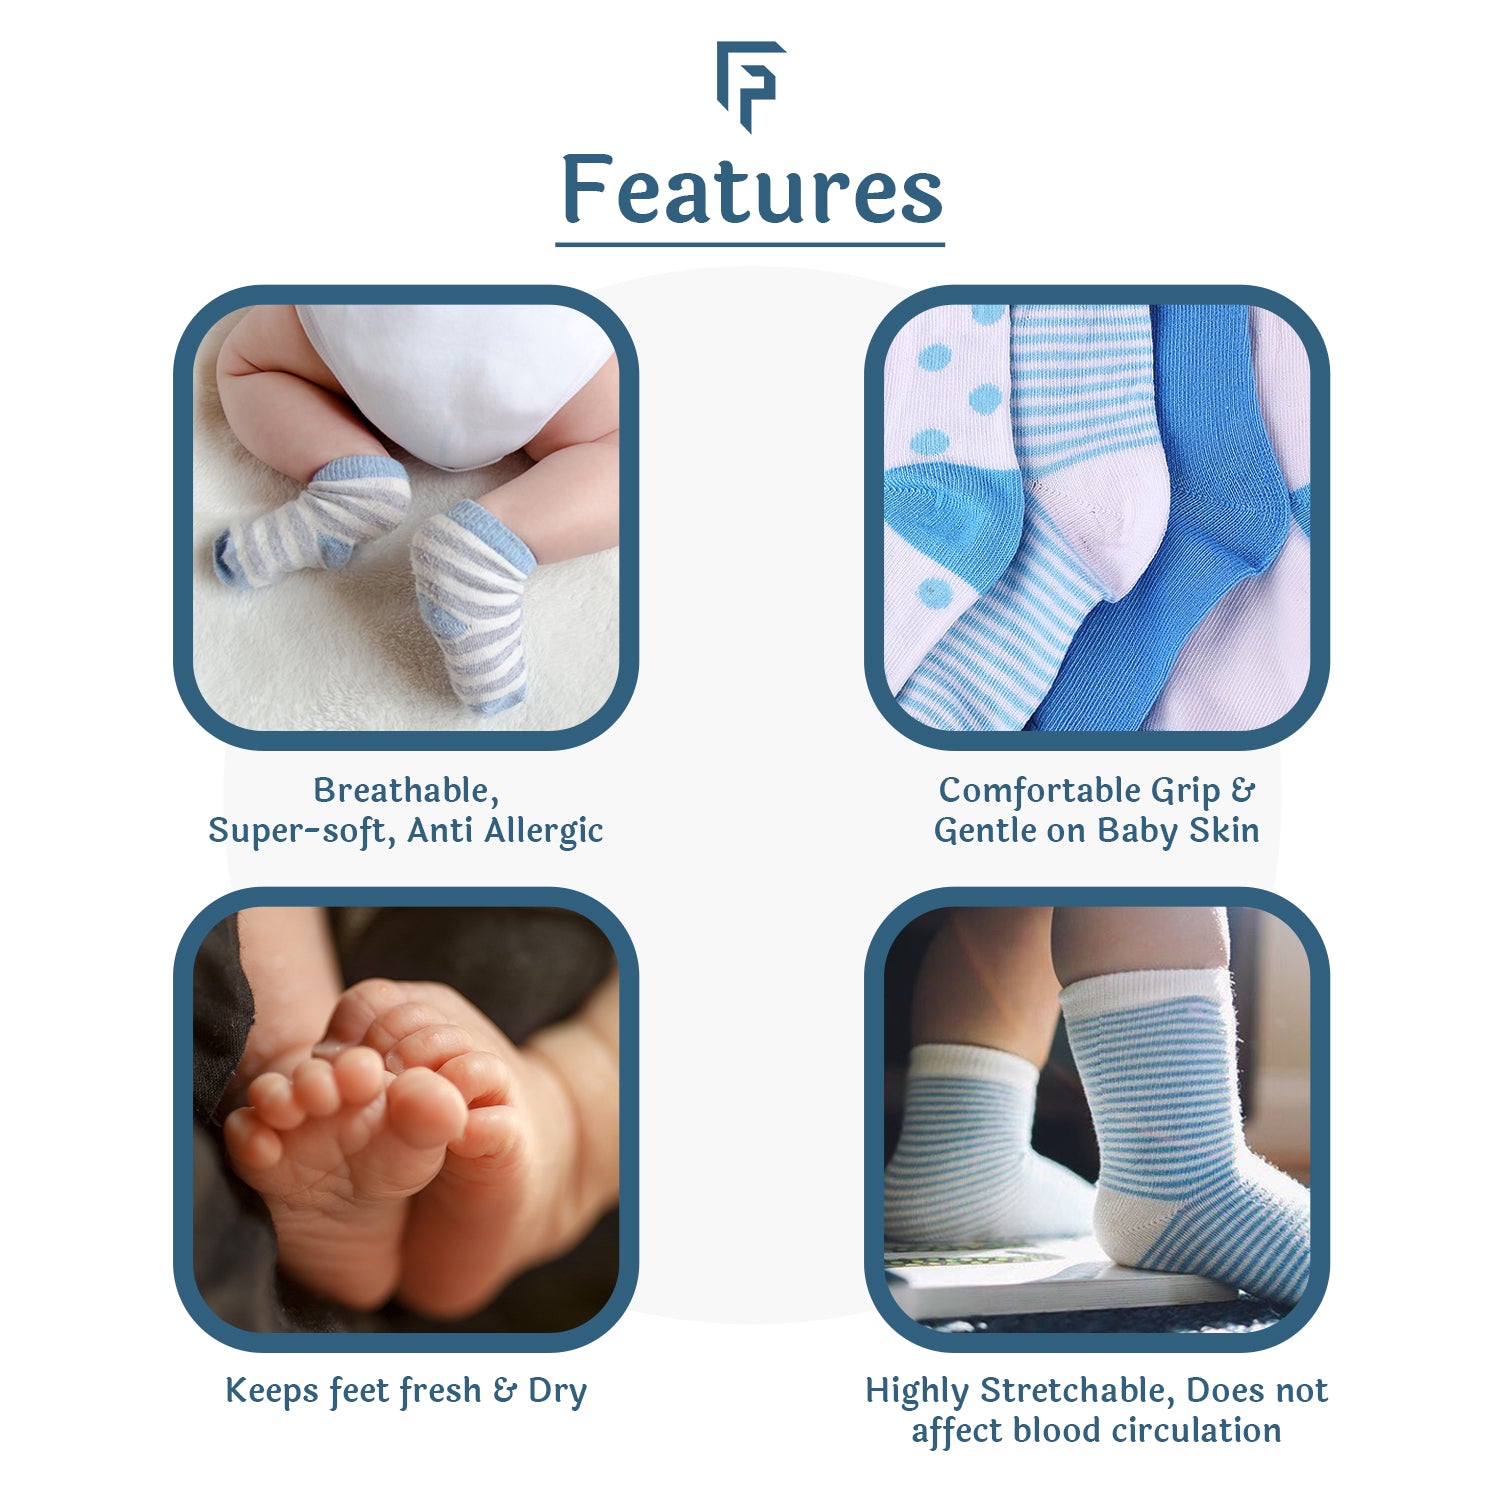 Footprints Super Soft  Organic Cotton Kids Socks | Fold & Blue Baseball |12-24 Months| Pack of 6